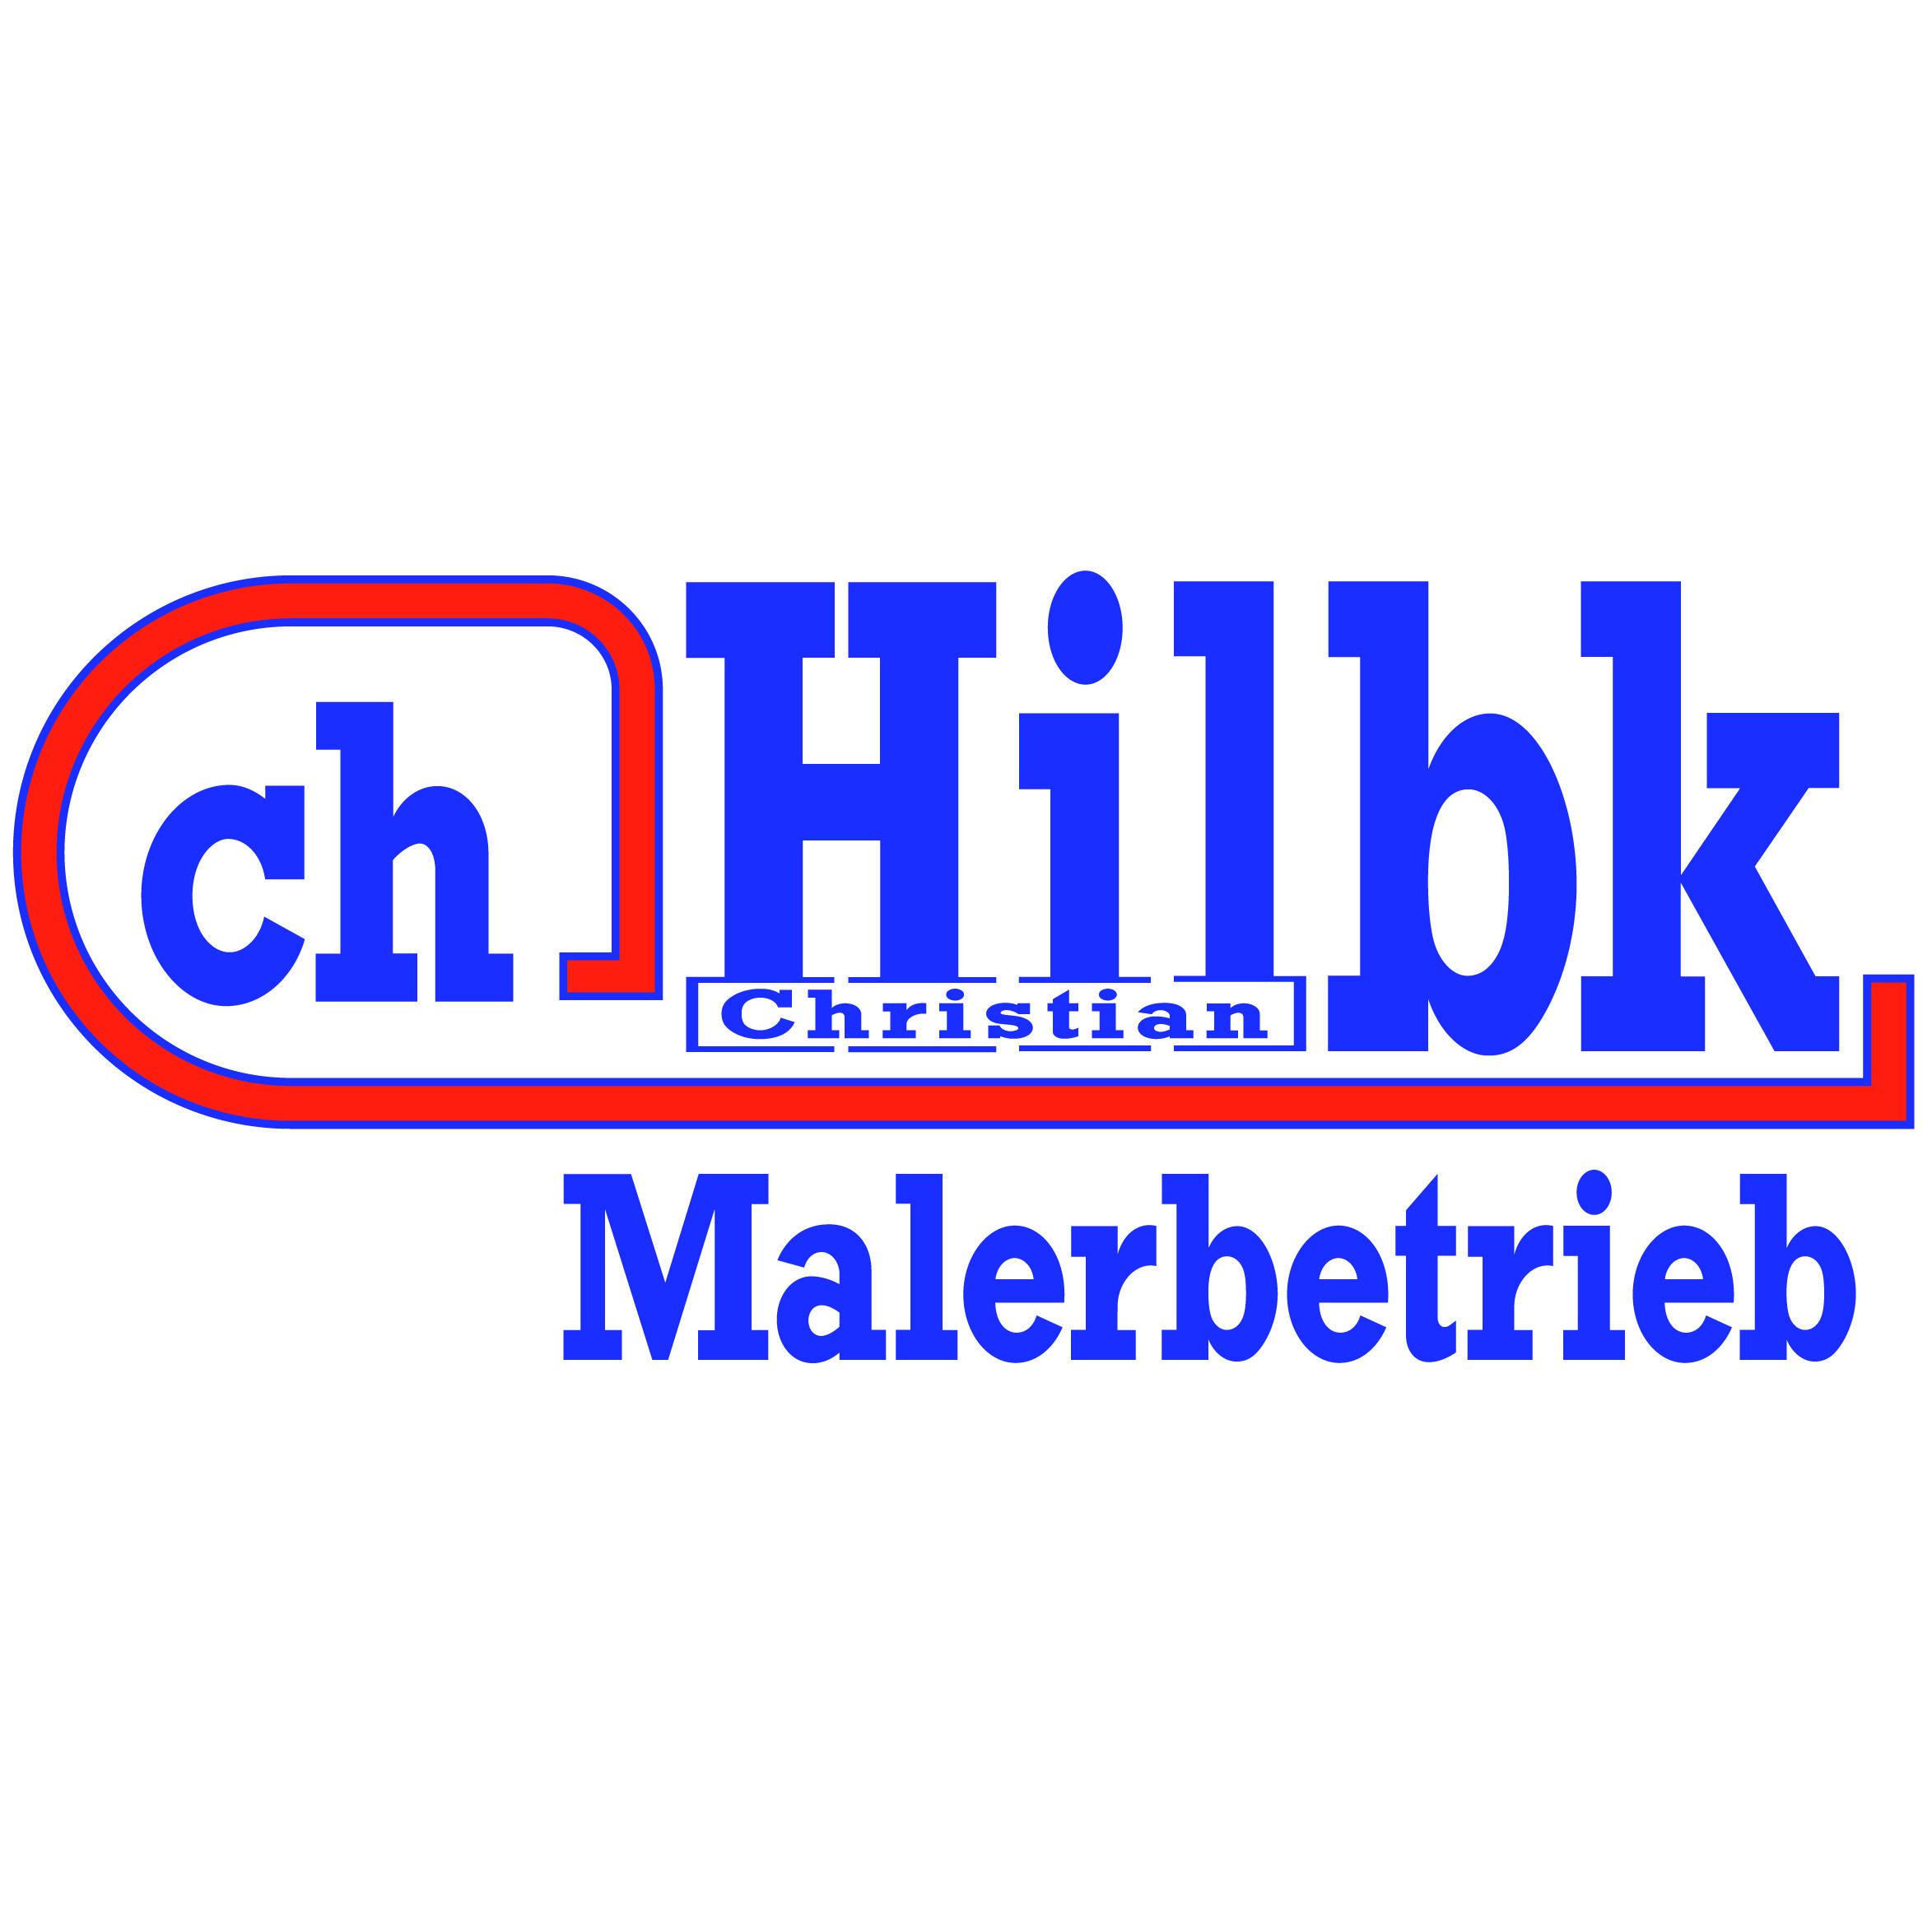 Malerbetrieb Christian Hilbk in Münster - Logo